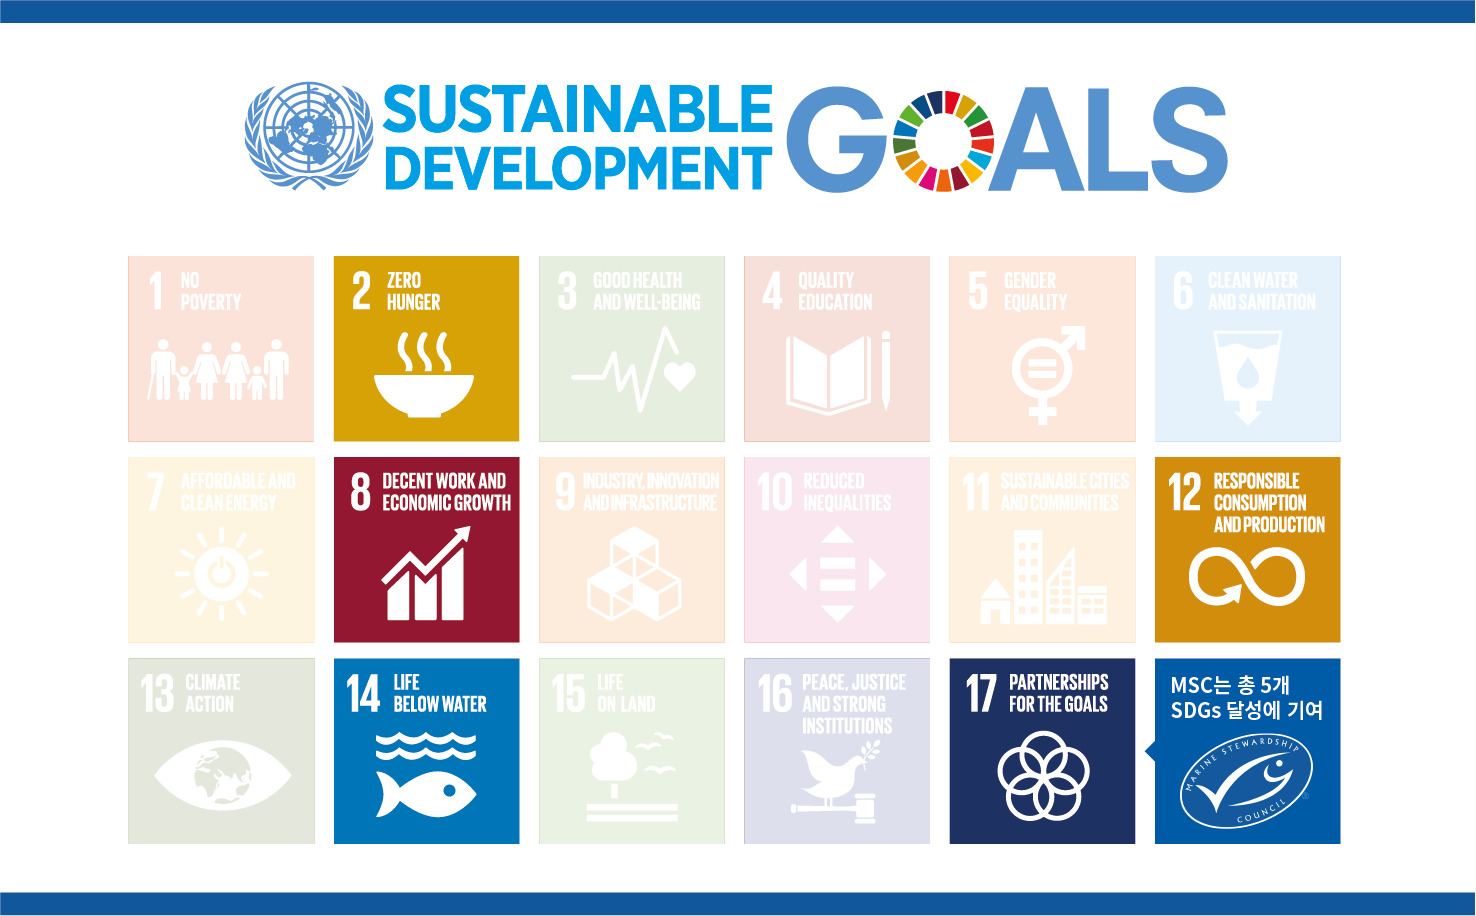 3. MSC 프로그램과 UN SDGs